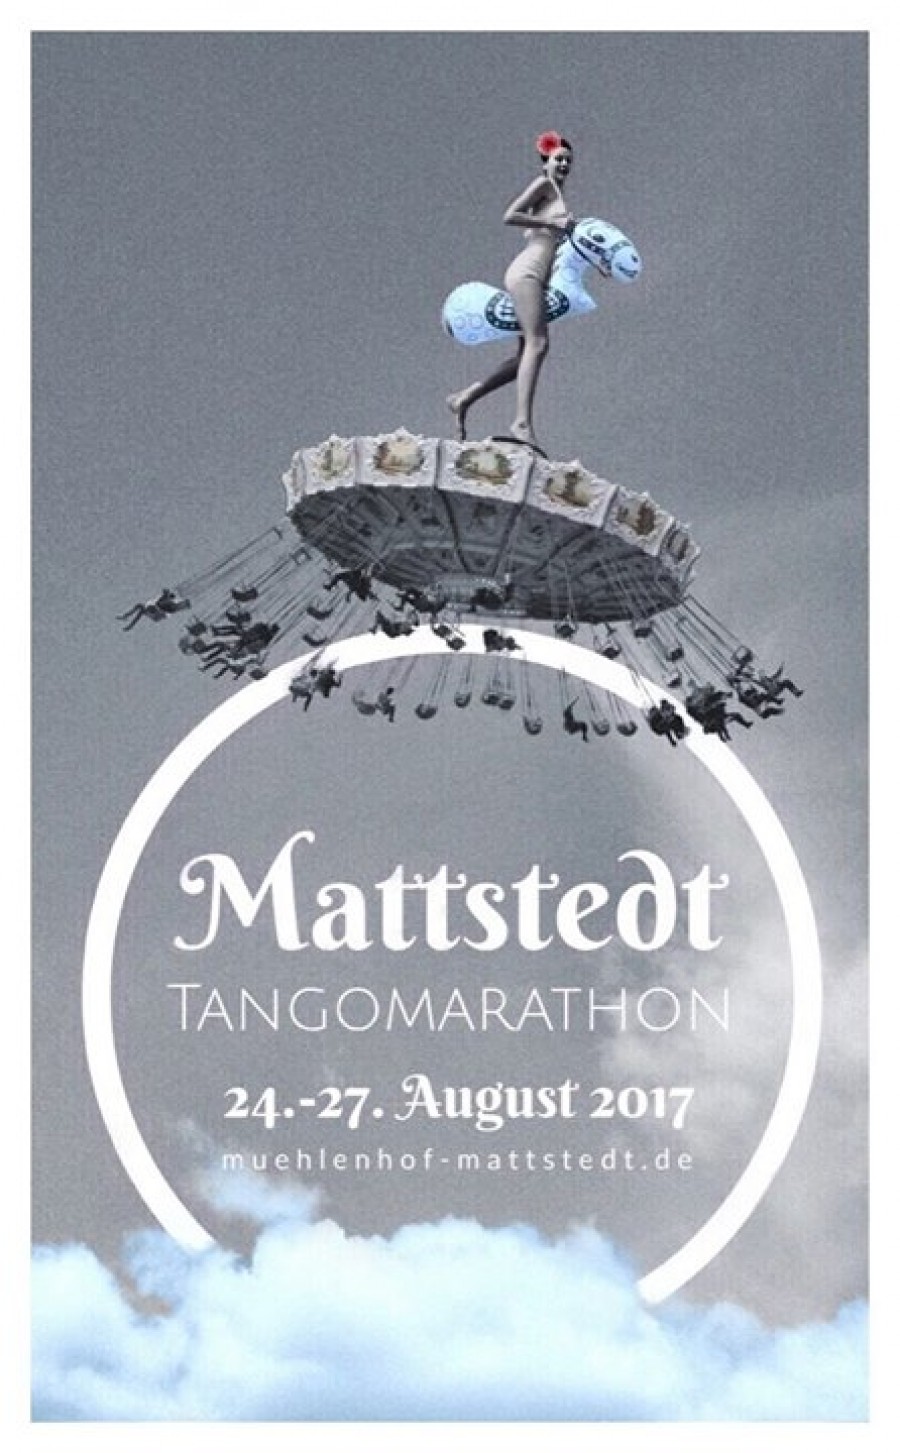 Mattstedt Tango Marathon